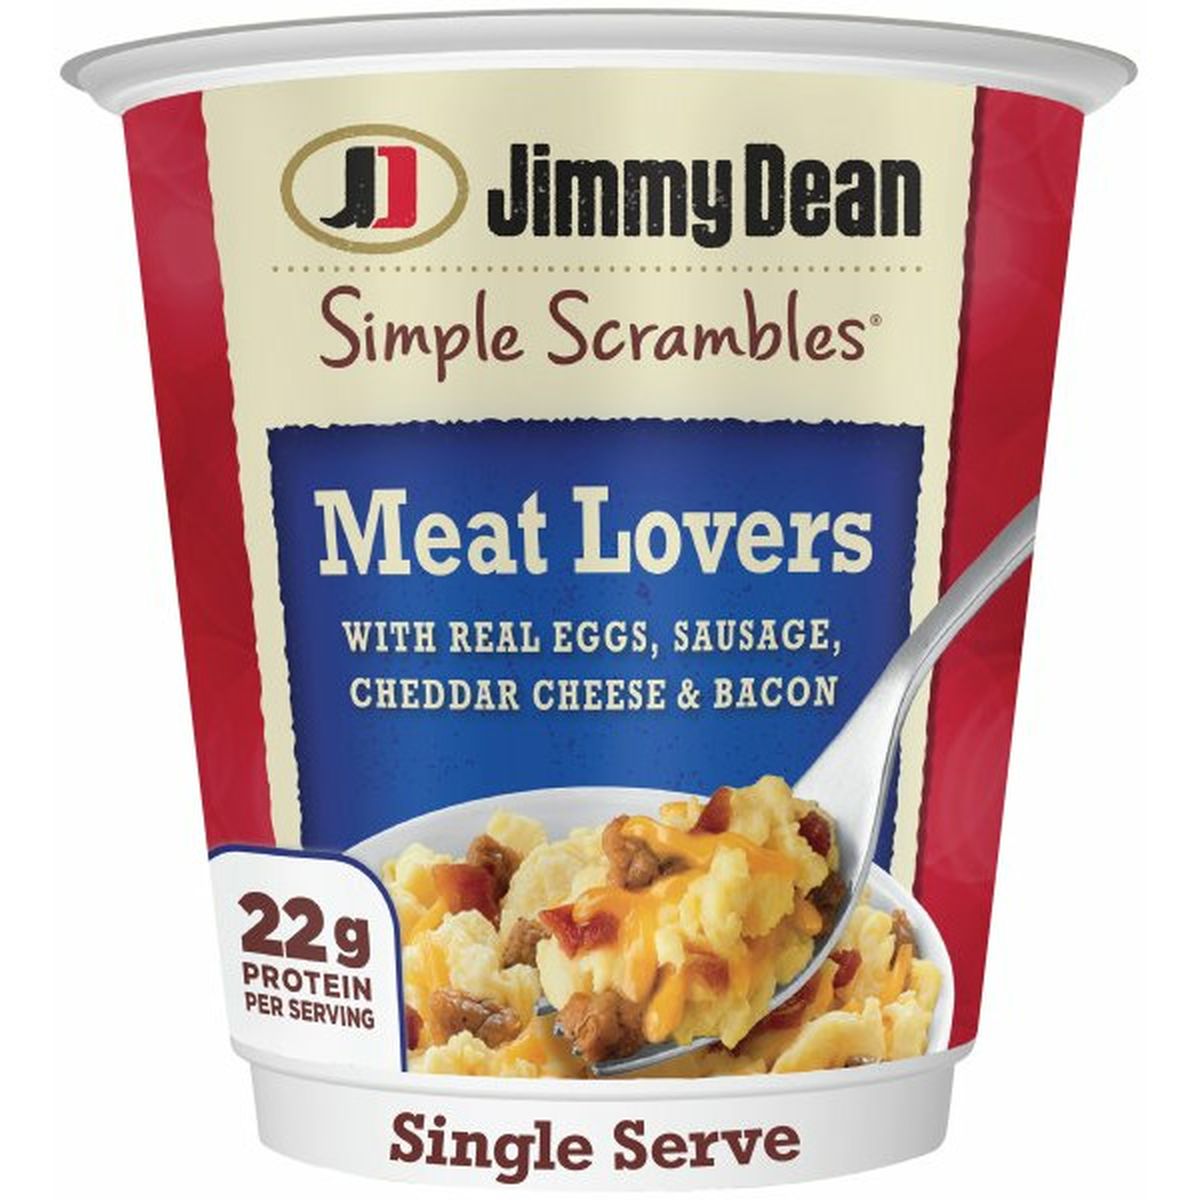 Calories in Jimmy Dean Simple Scrambles Simple Scrambles Meat Lovers, 5.35 oz.